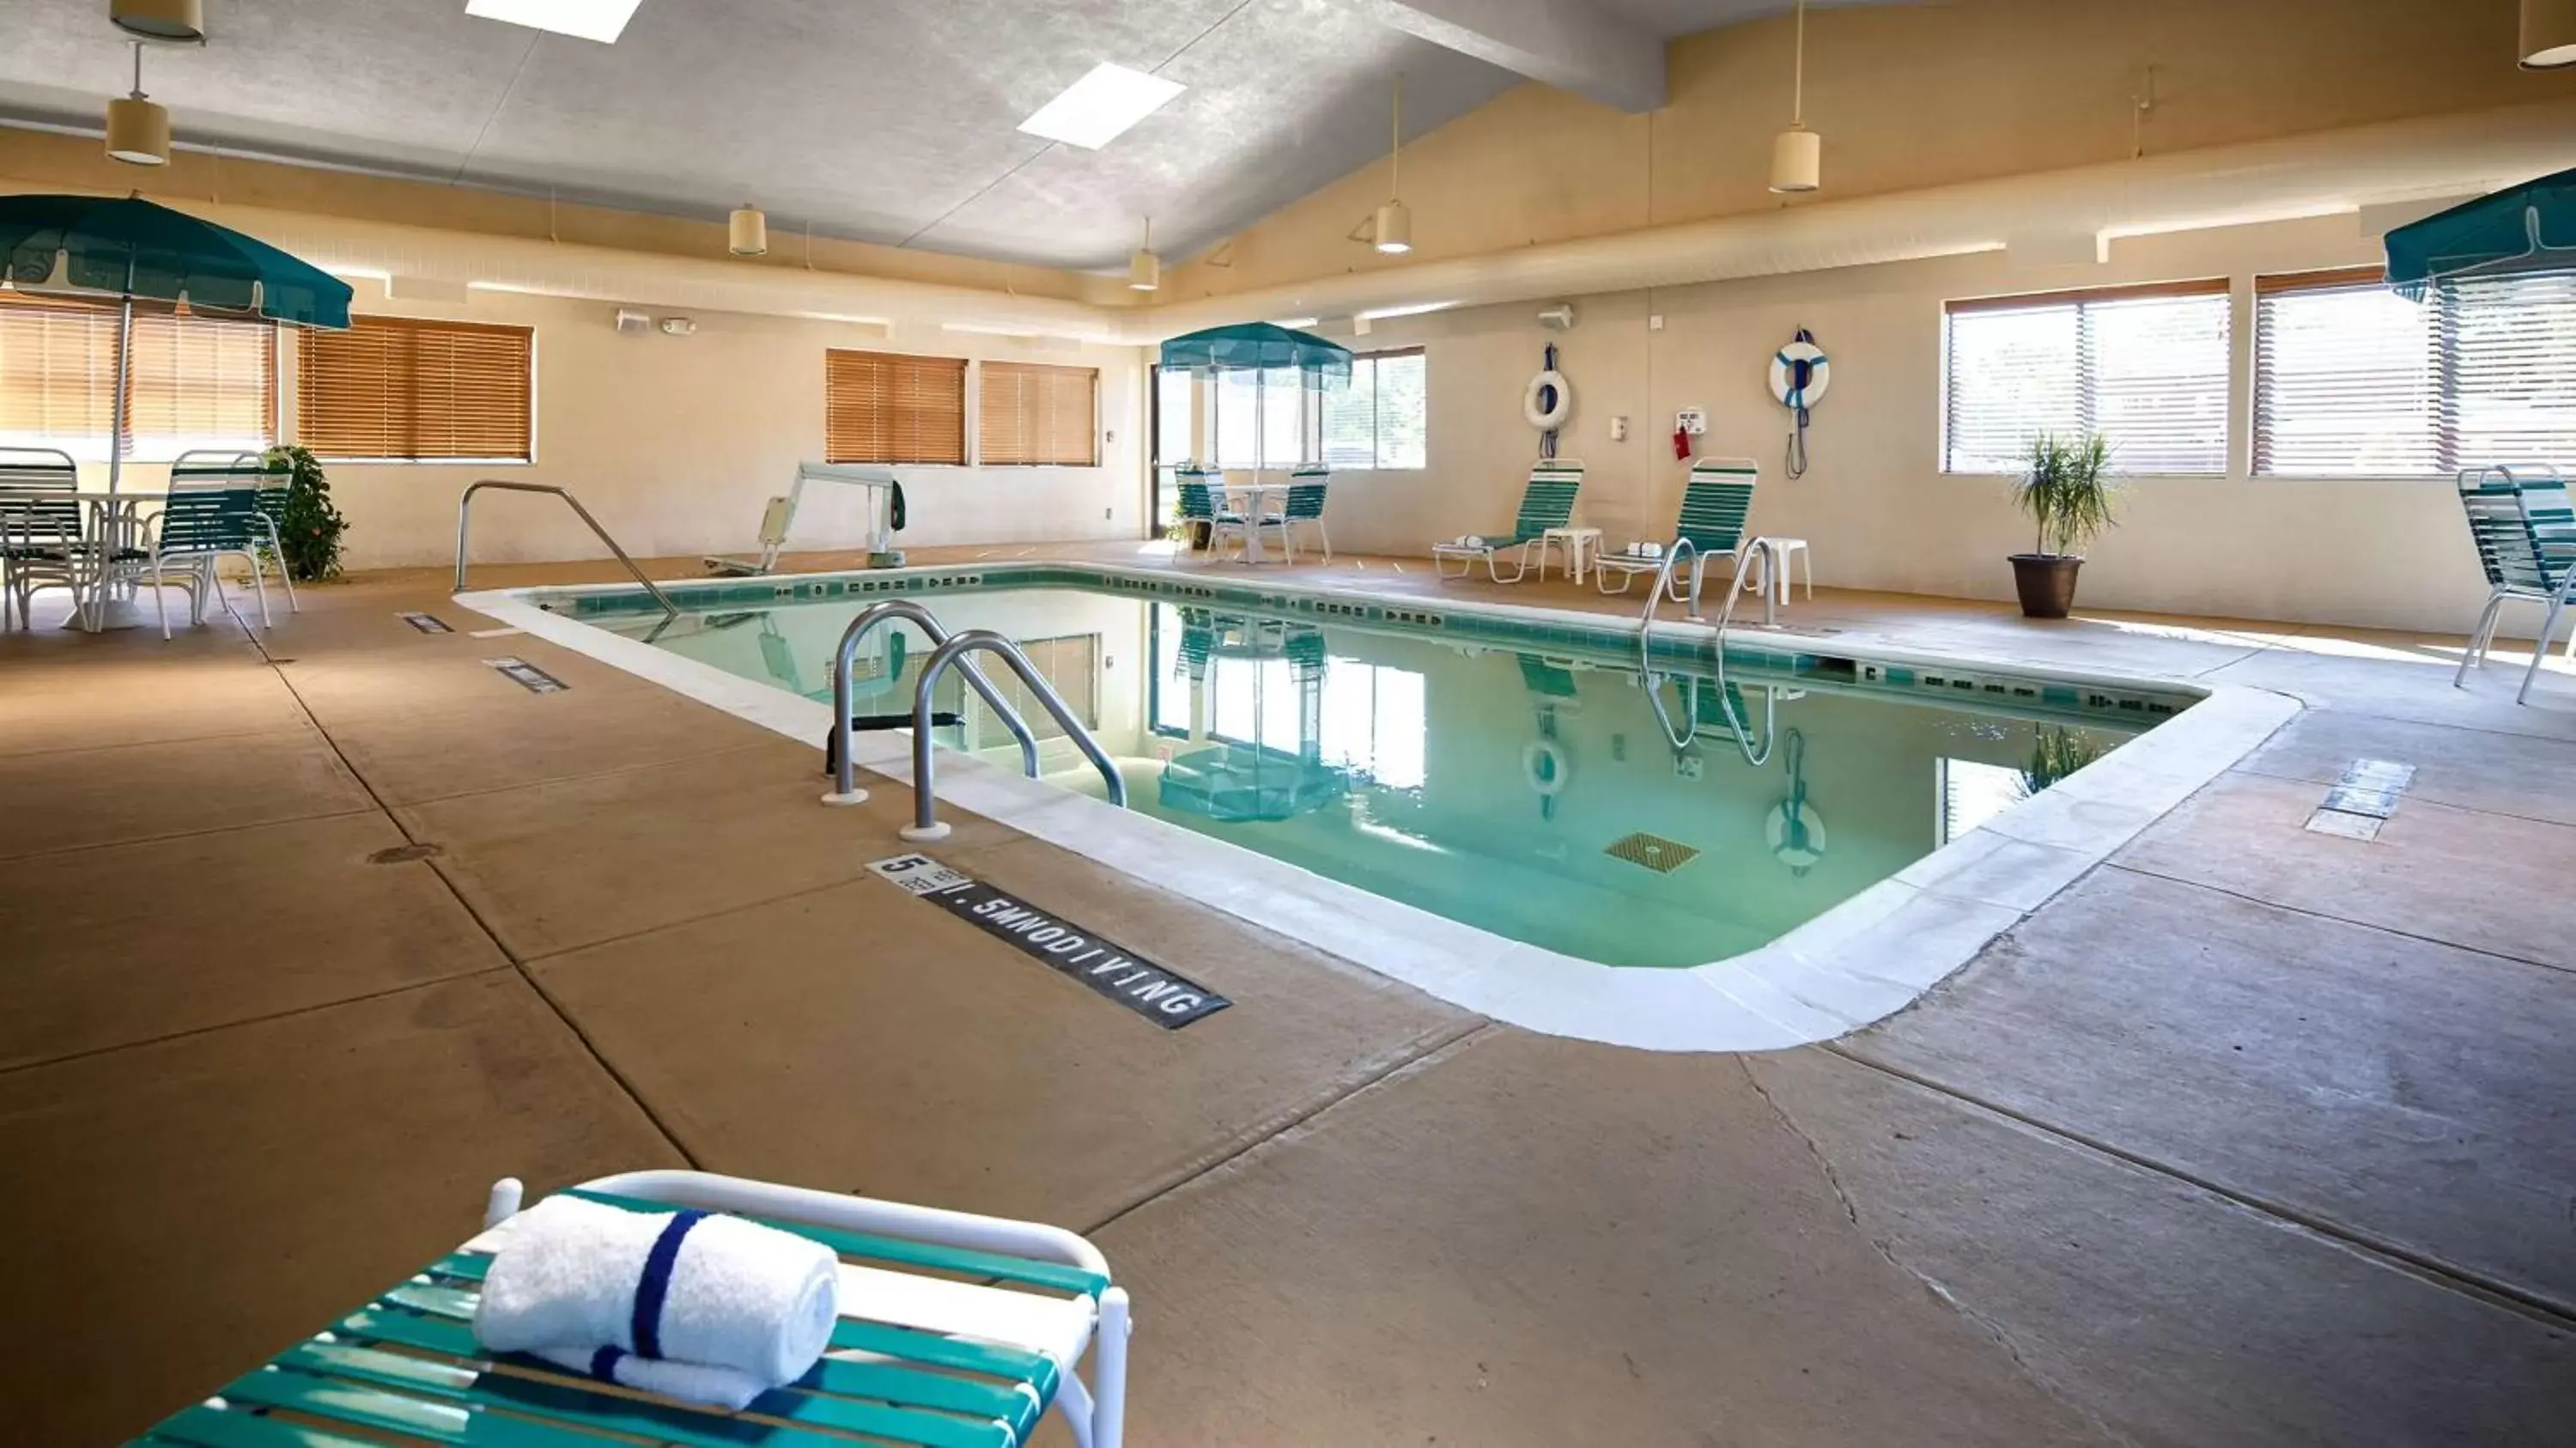 On site, Swimming Pool in Best Western Maple City Inn